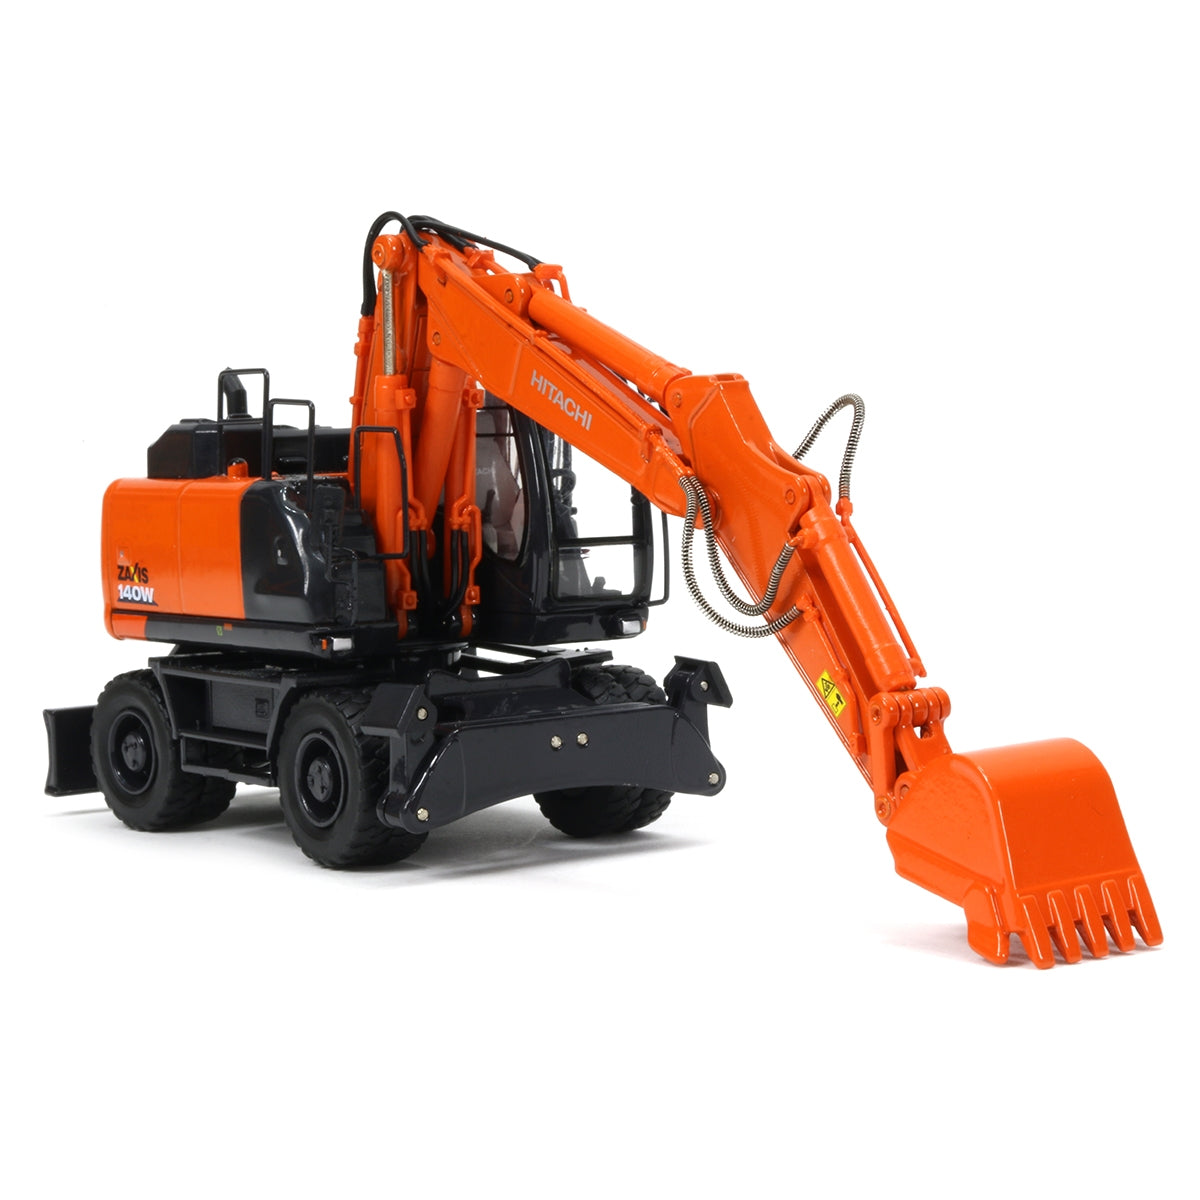 Scale ZX140W-6 Hydraulic wheeled excavator